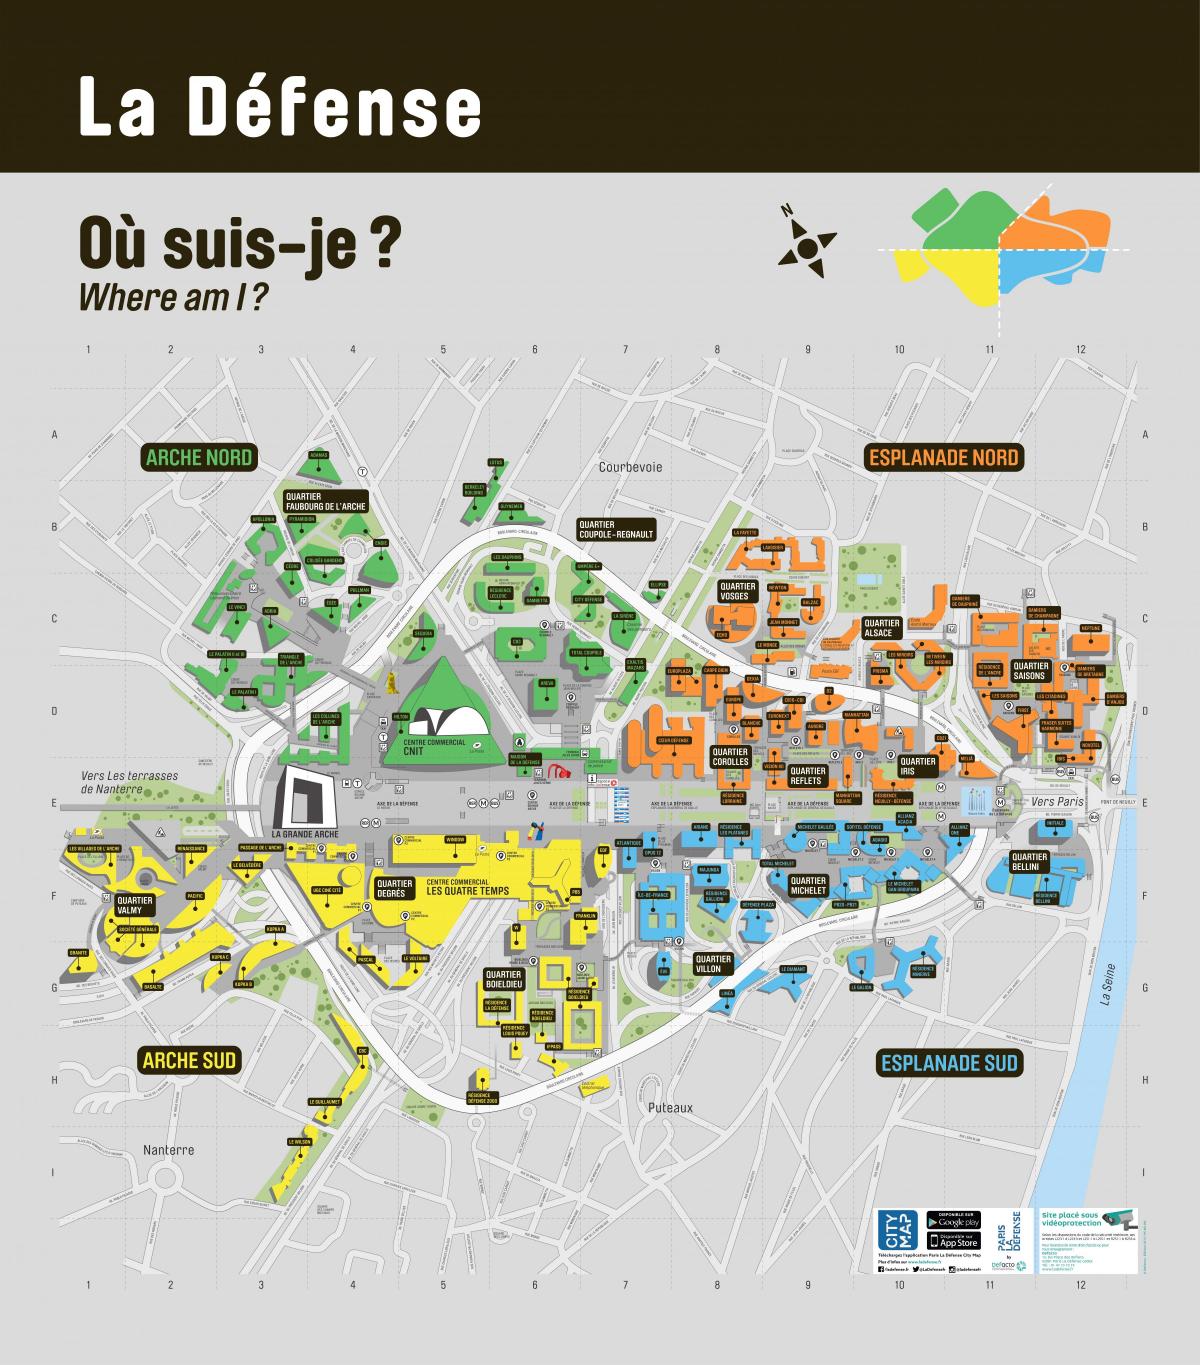 Kort over La Défense